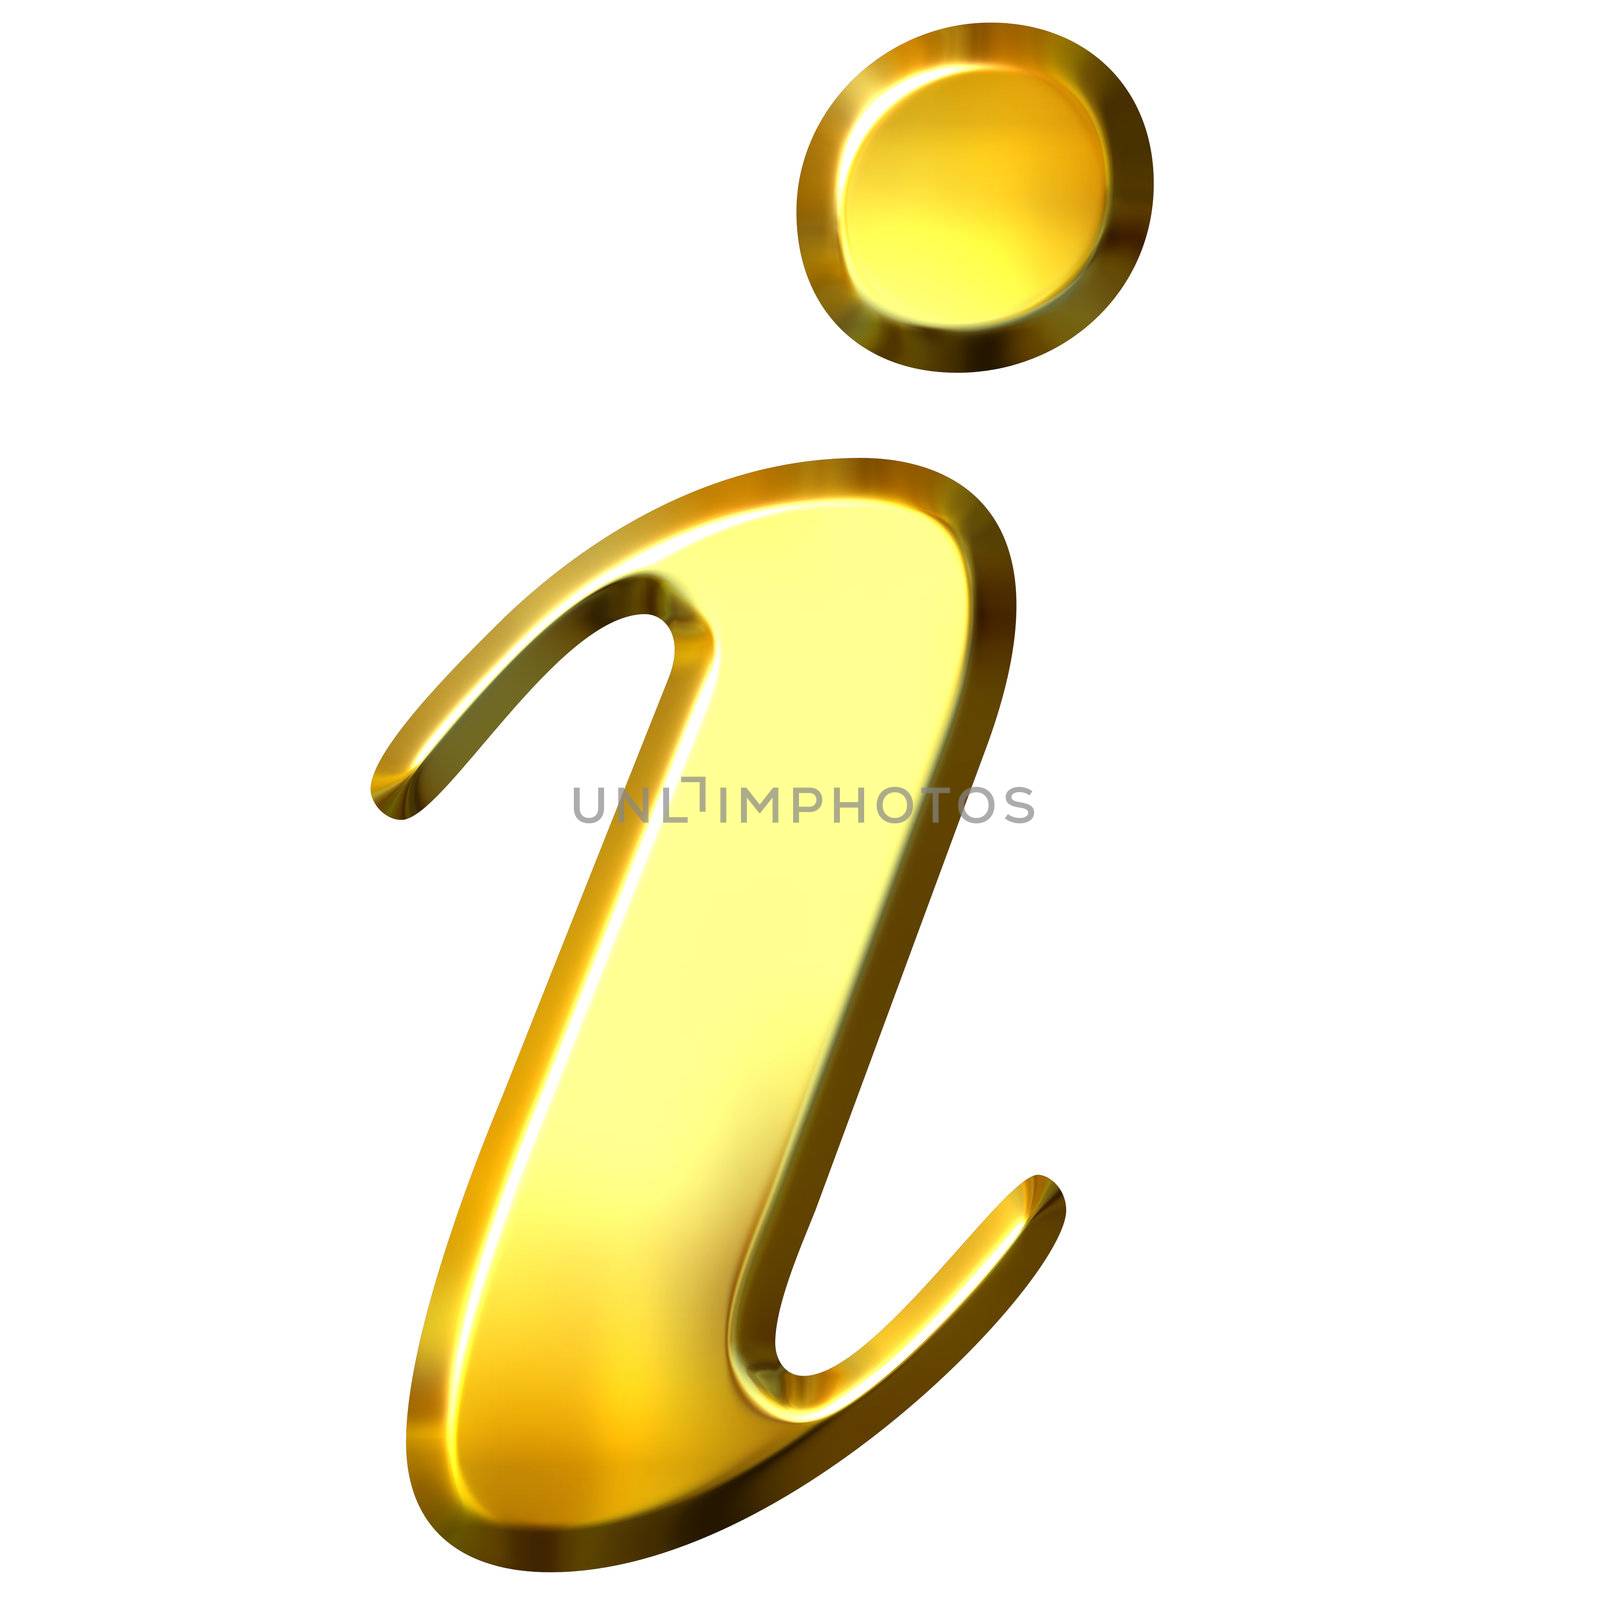 3D Golden Information Symbol by Georgios